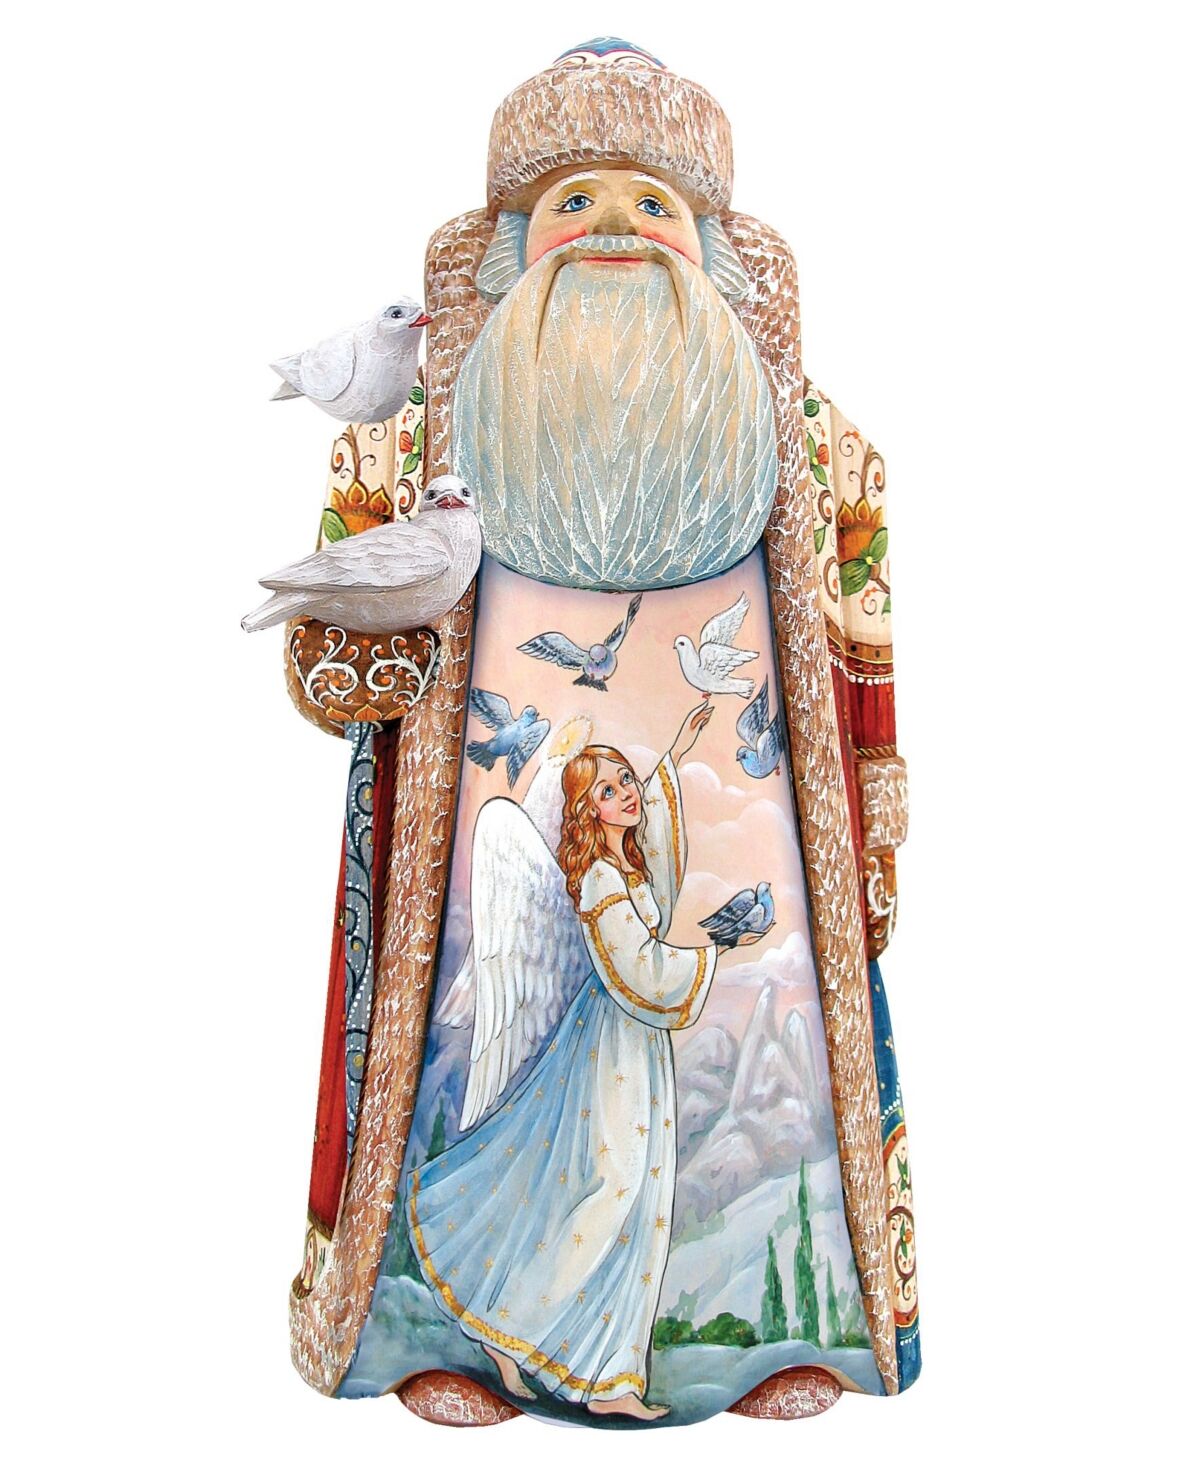 G.DeBrekht Woodcarved Polar Story Special Edition Santa Figurine - Multi